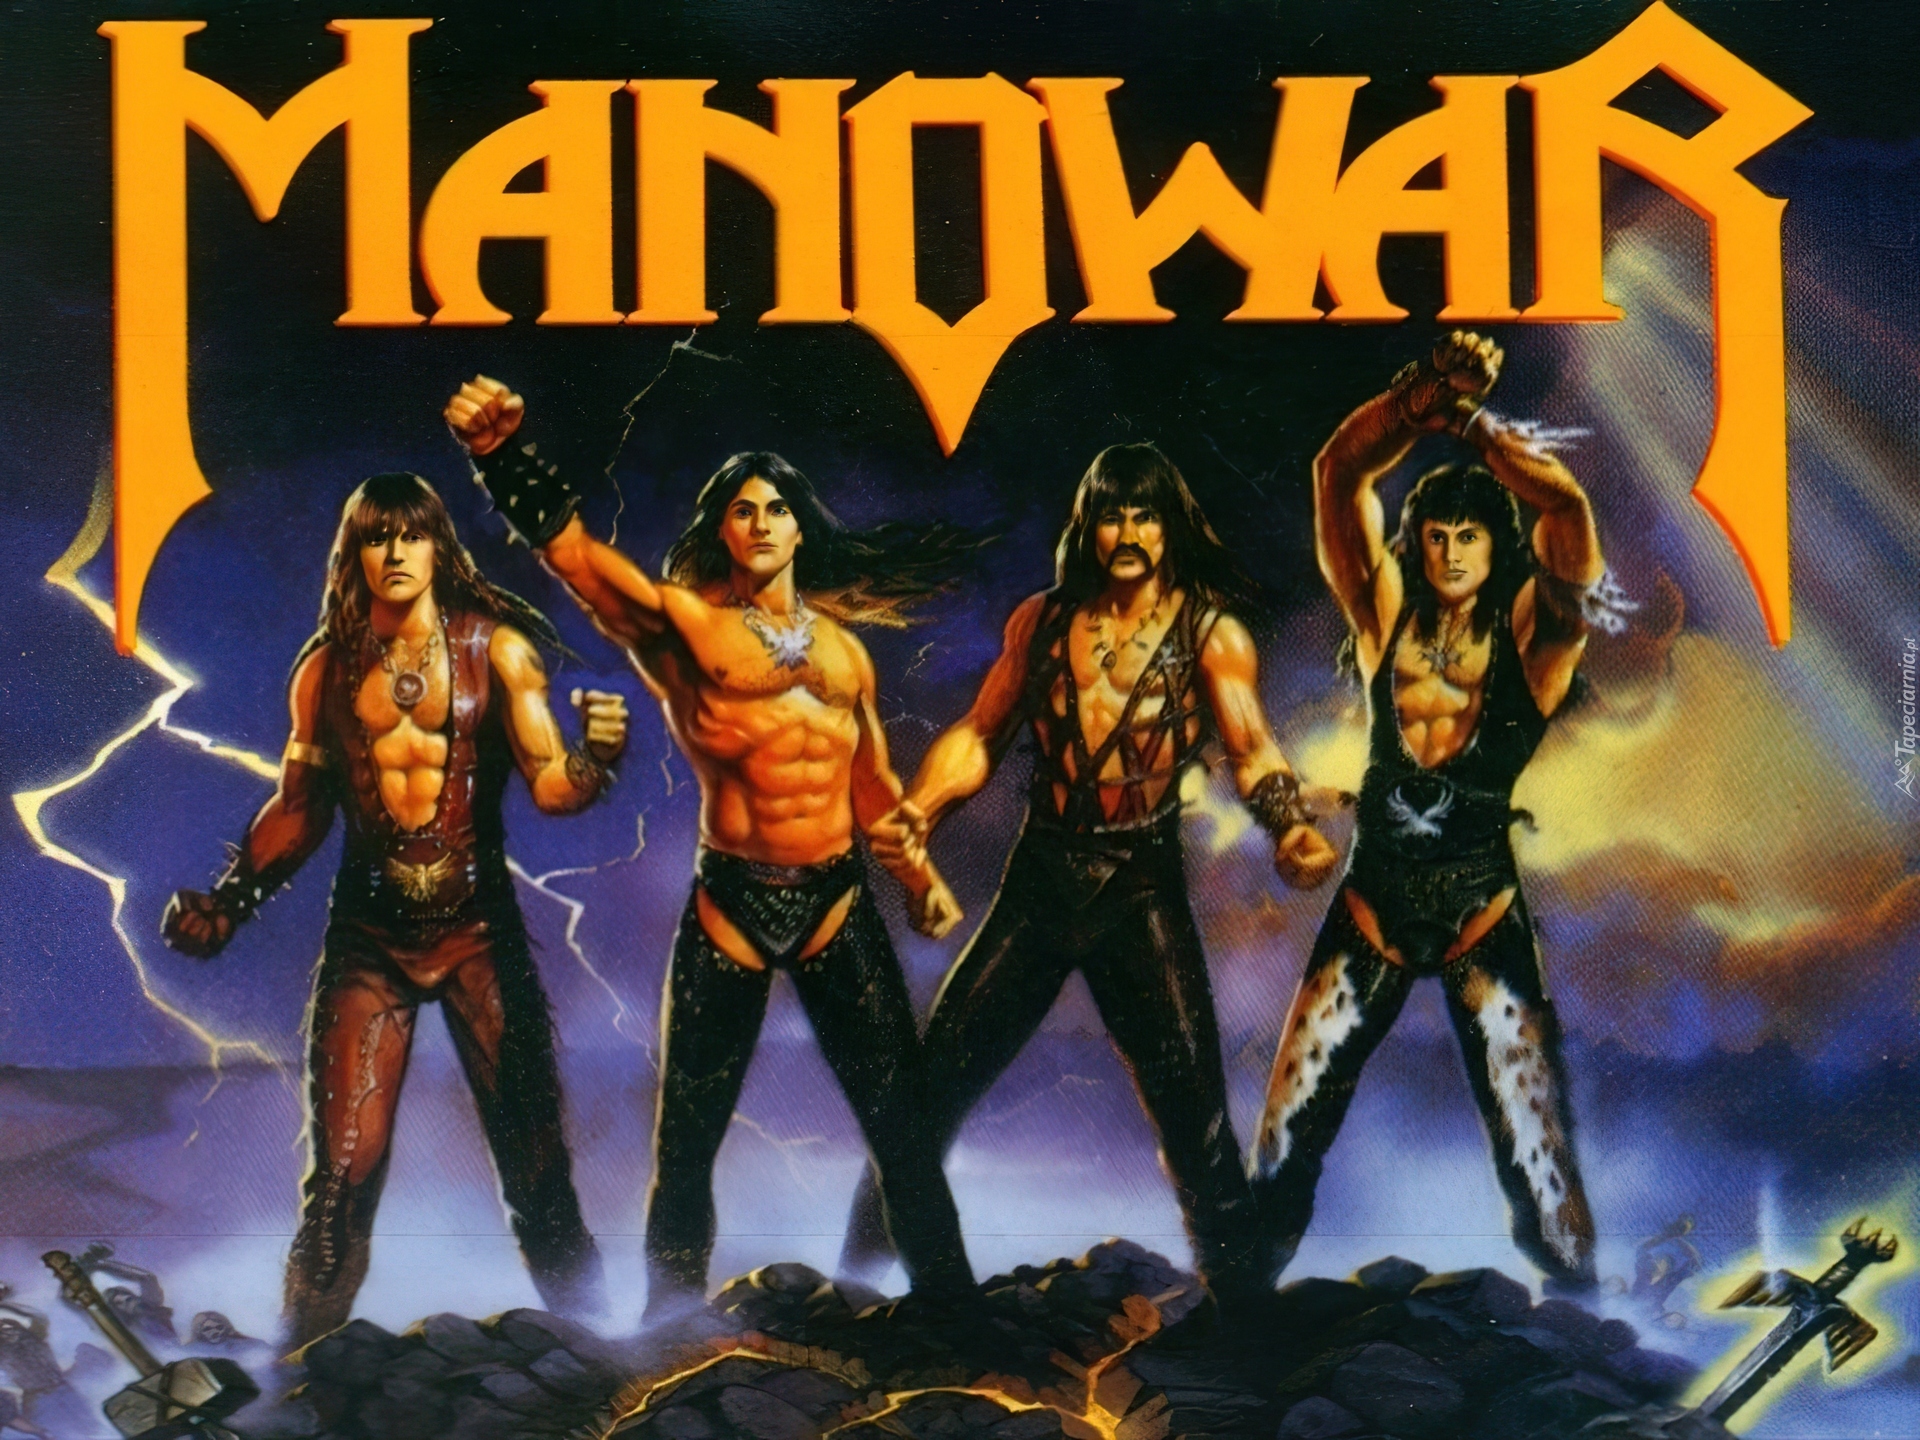 Manowar mp3. Группа Manowar 2021. Группа Manowar иллюстрации. Manowar постеры. Группа Manowar обложки.